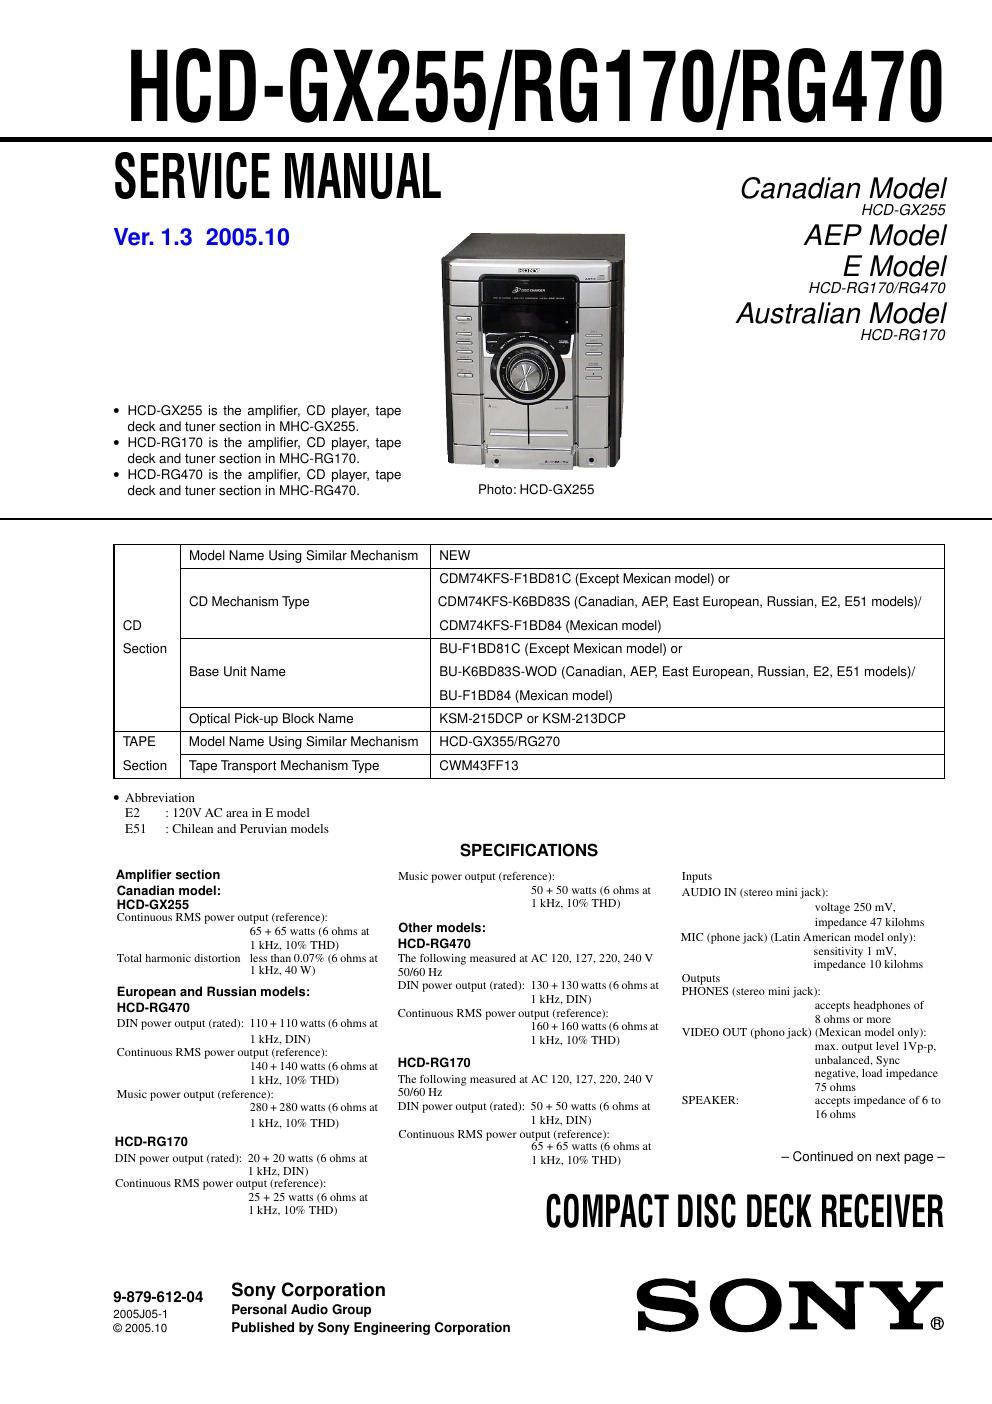 sony hcd rg 470 service manual